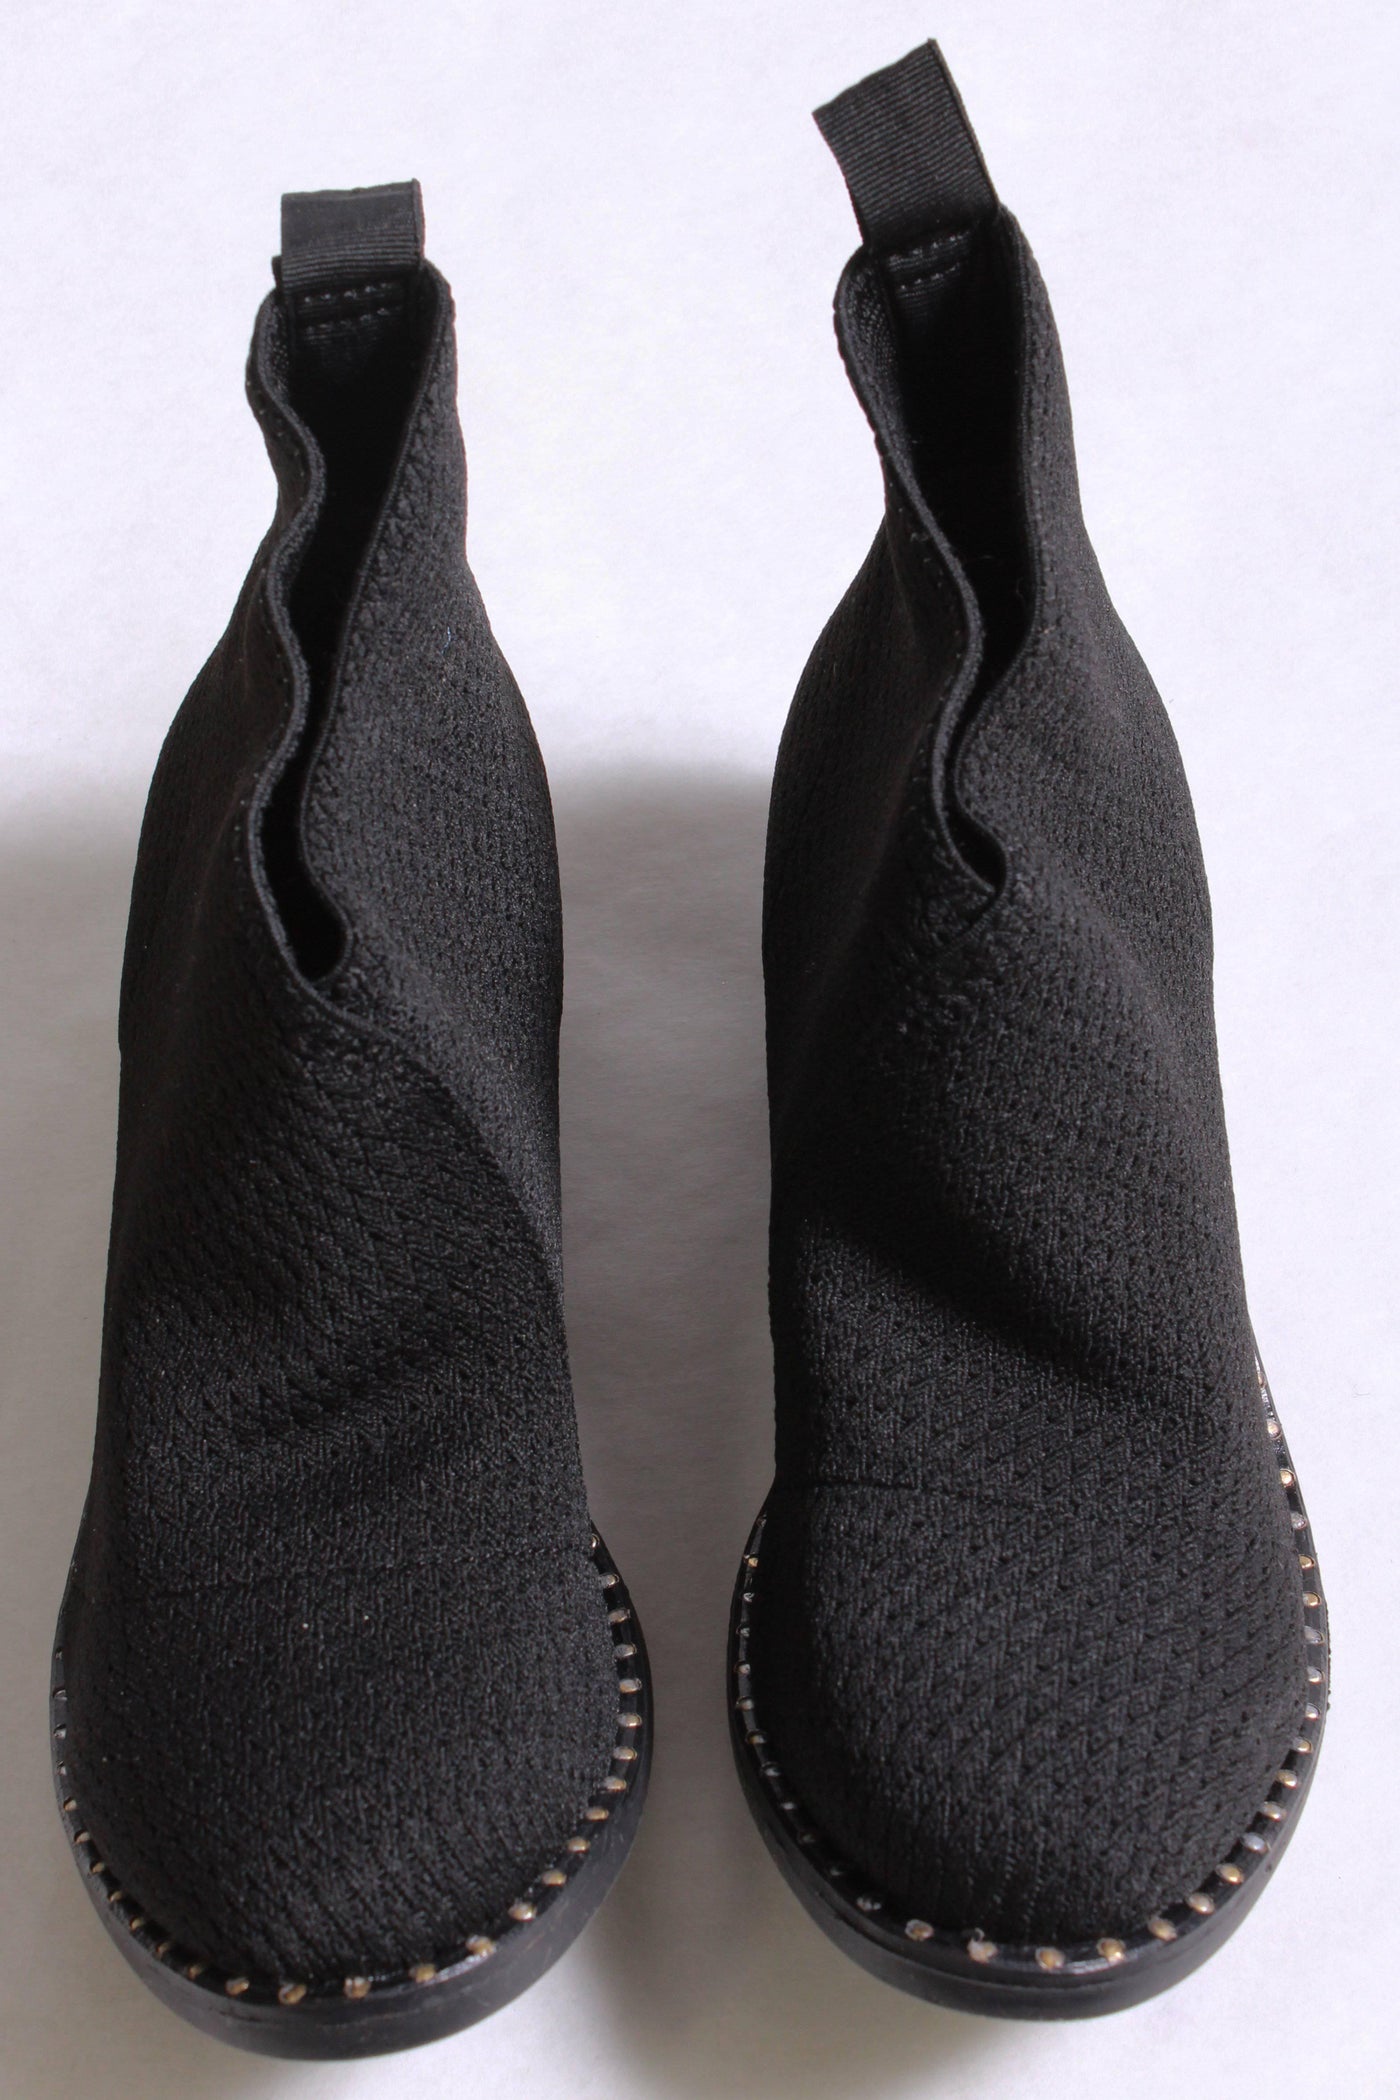 Barcelona Boot-Charleston Shoe Company - Inspire Me